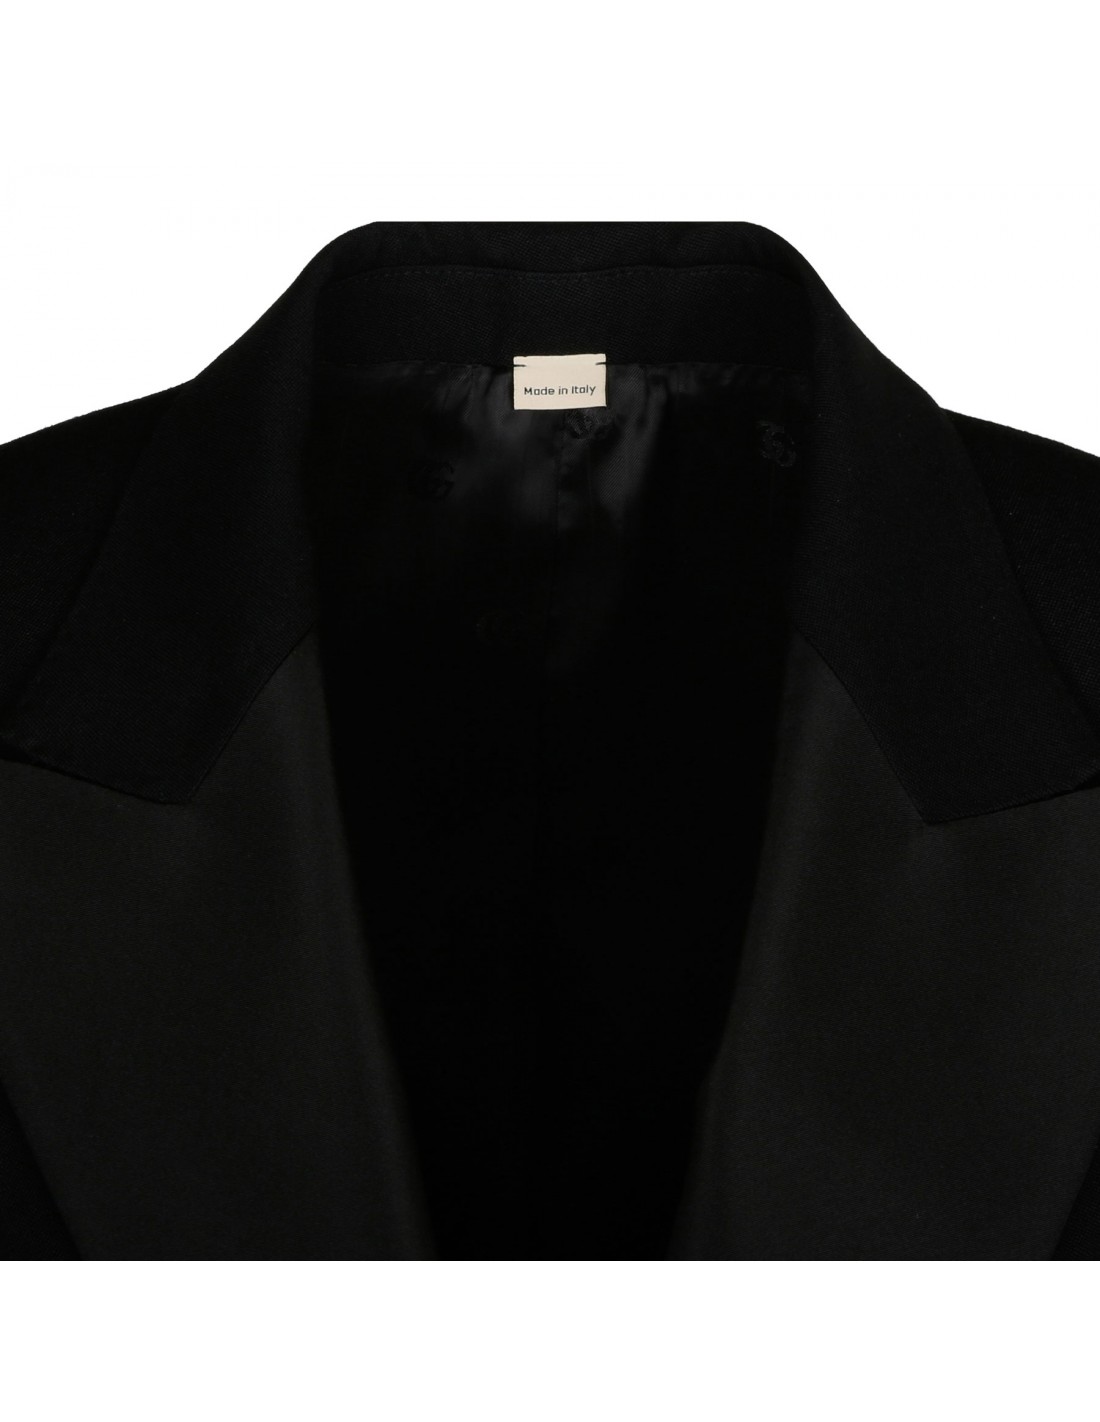 Black tailored jacket